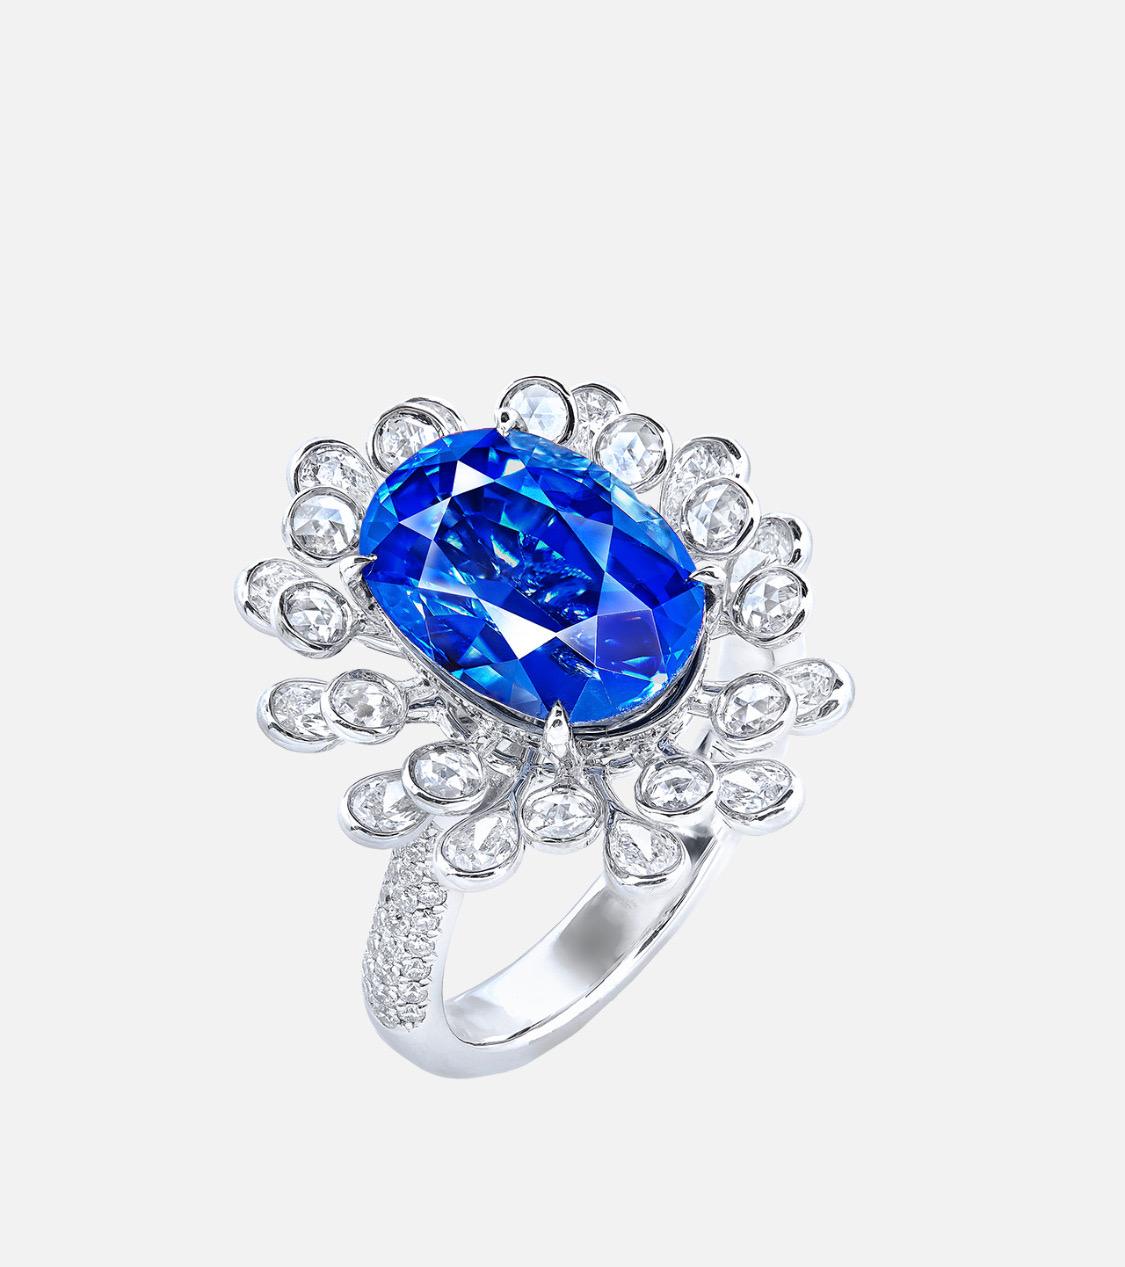 Cushion Cut Emilio Jewelry 6.00 Carat Certified Kashmir Sapphire Ring For Sale